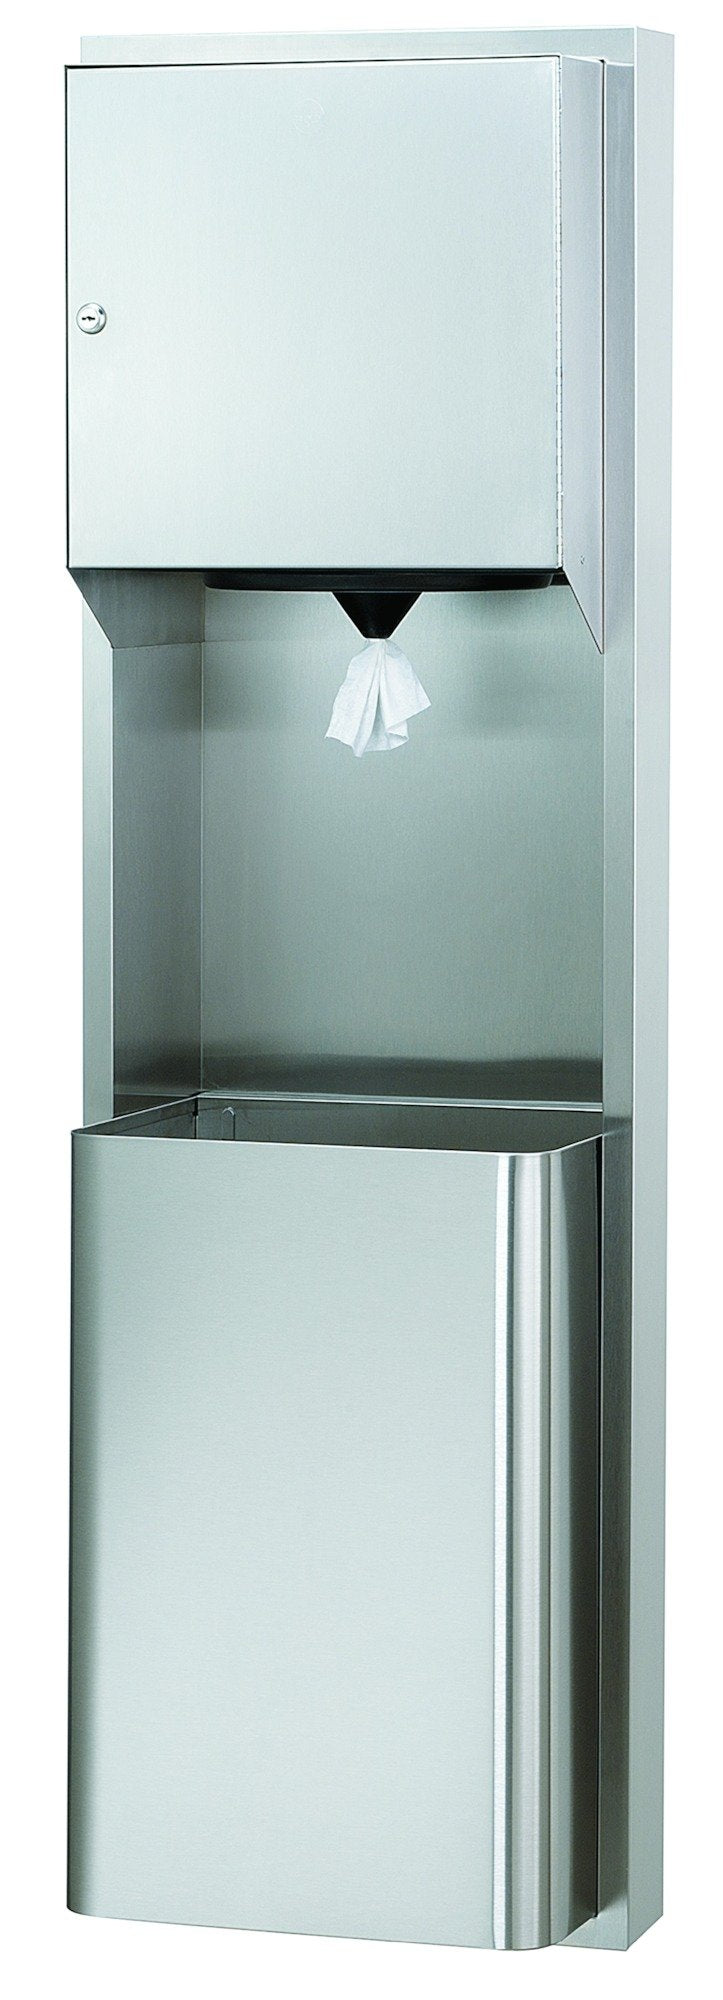 Bradley 236-103600 - Semi Recessed Paper Towel Dispenser and Waste Receptacle, 18 Gal